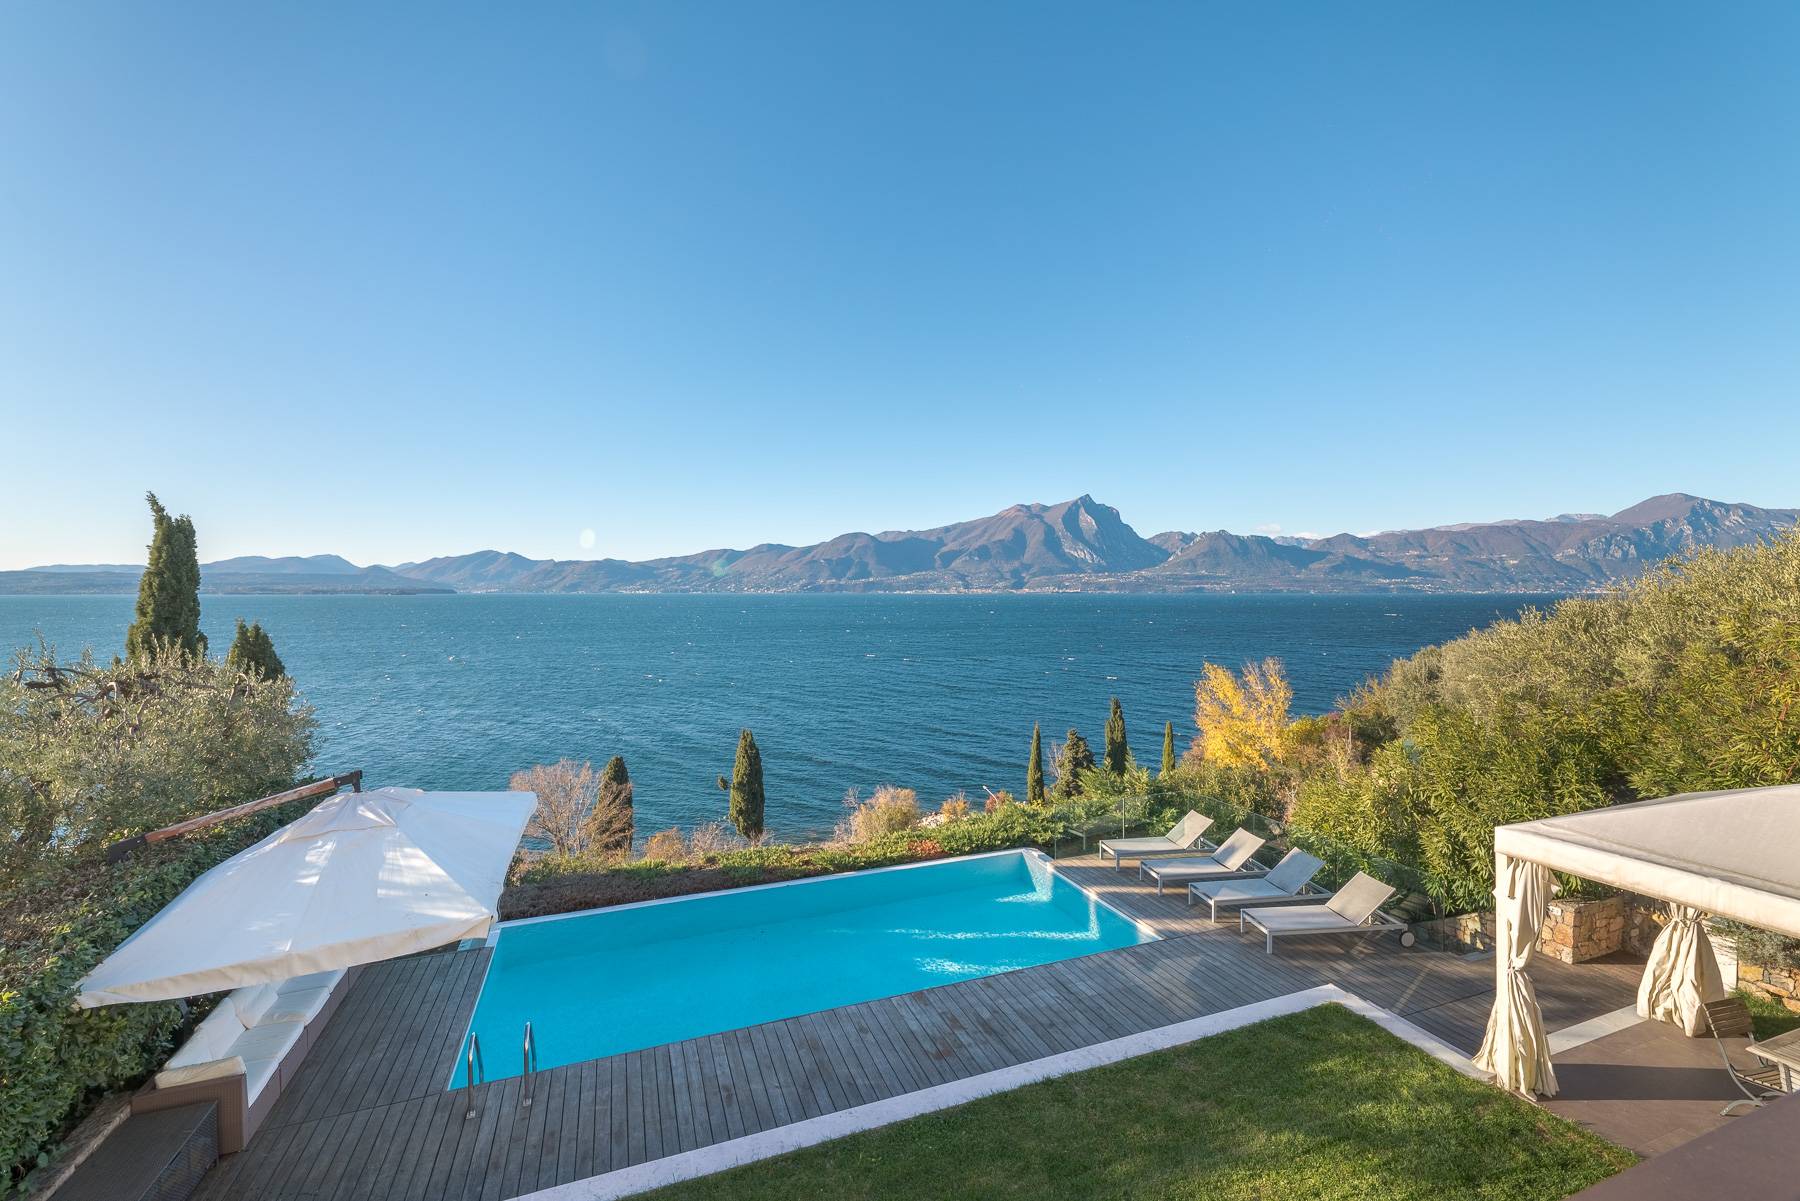 Modern villa with swimming pool and breathtaking lake views